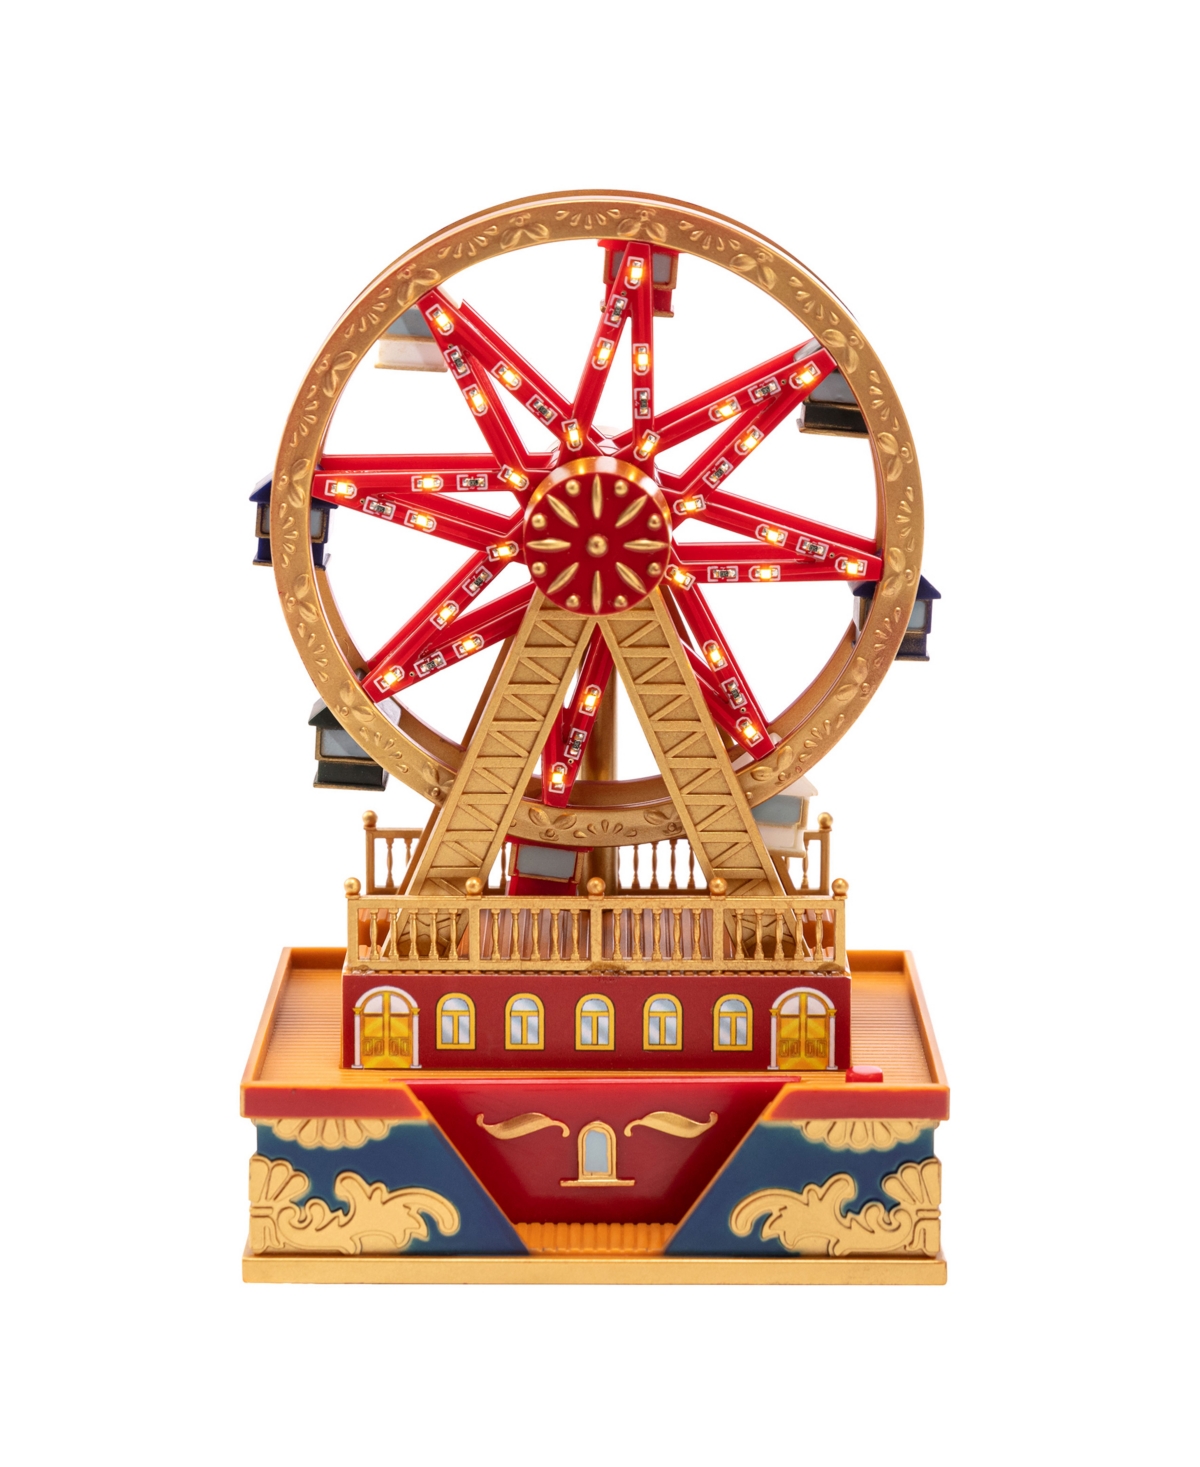 Mr. Christmas 5.75" Animated Musical Ferris Wheel In Multi